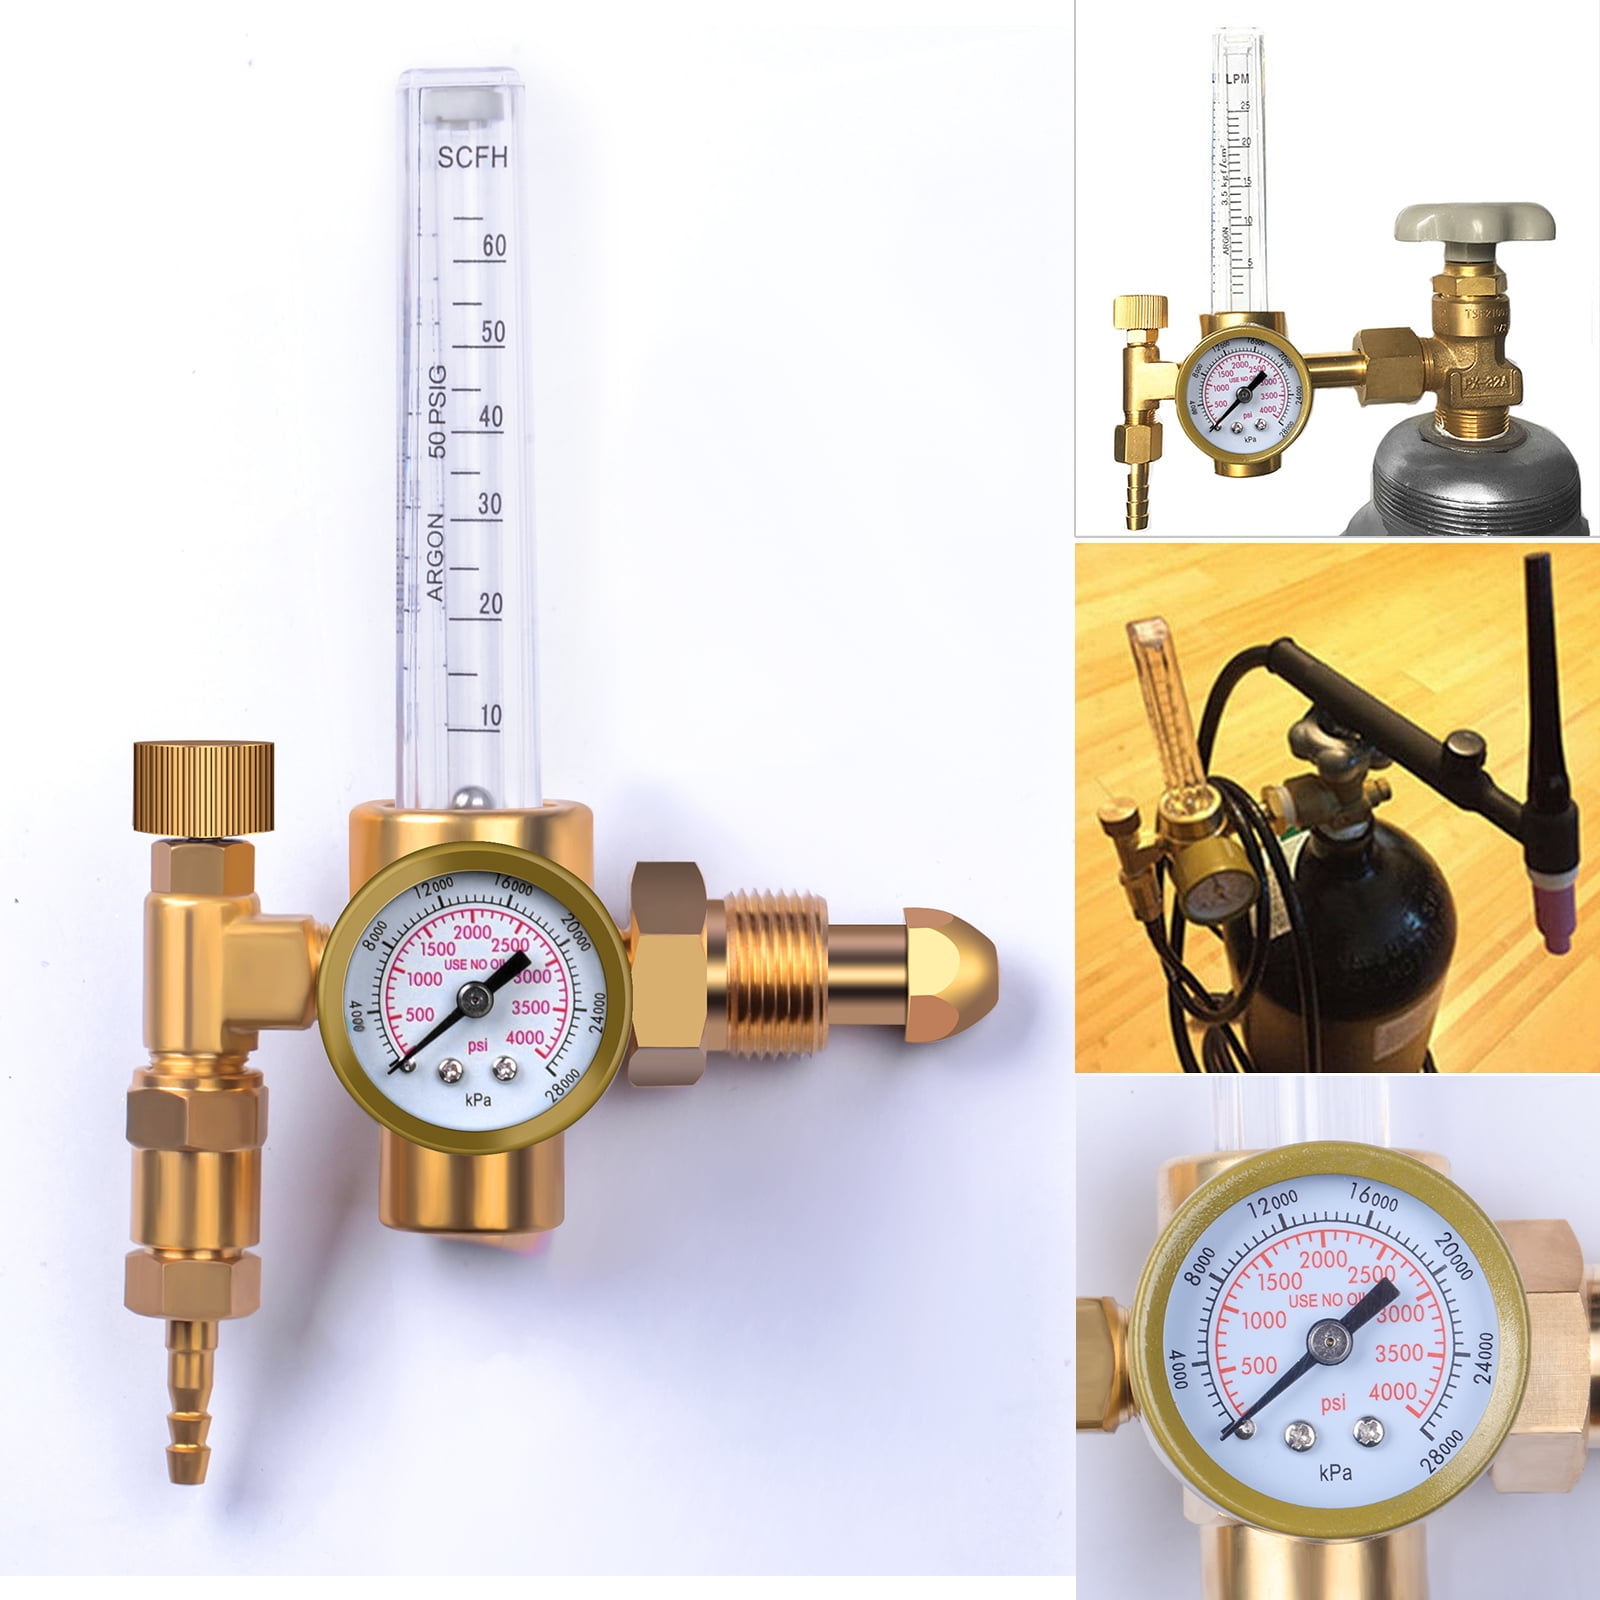 CO2 Flowmeter 10 to 60 CFH Accurate Gauge 0 To 4000 Psi Pressure for Welder Tank HighFree Argon Flowmeter Regulator for Welding CGA580 Miller Lincoln MIG TIG